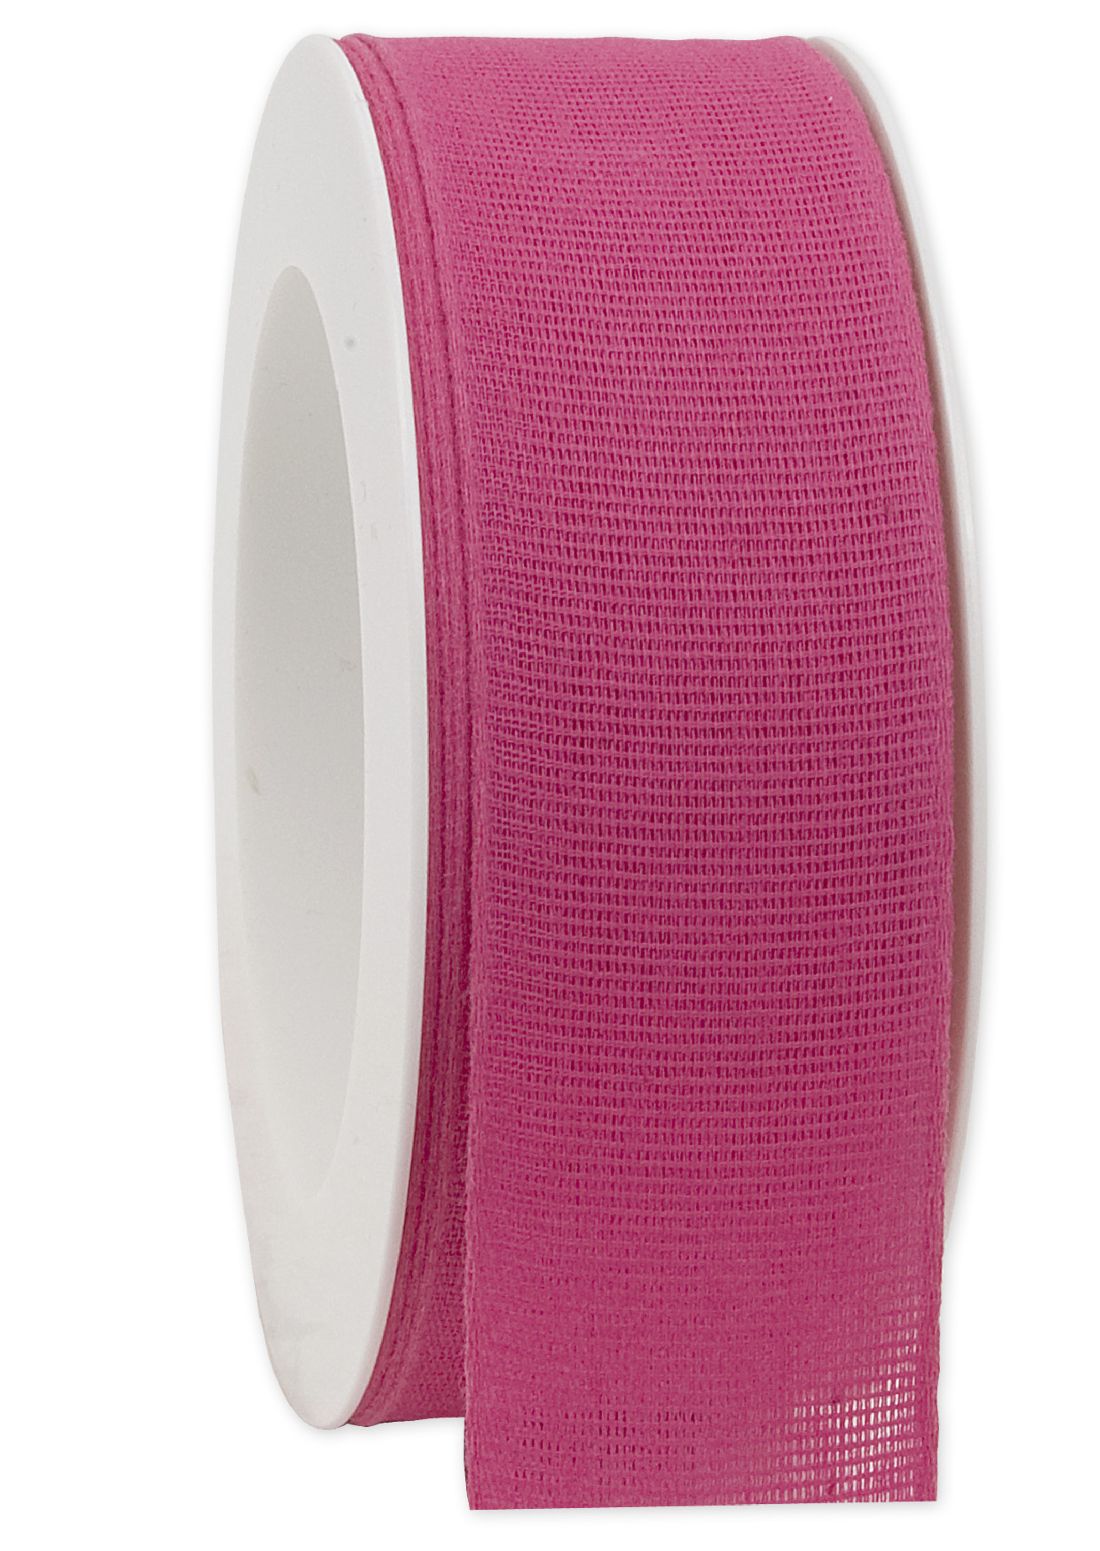 Basicband NATURE pink 241 biologisch abbaubar B:40mm L:20m Baumwollband 267